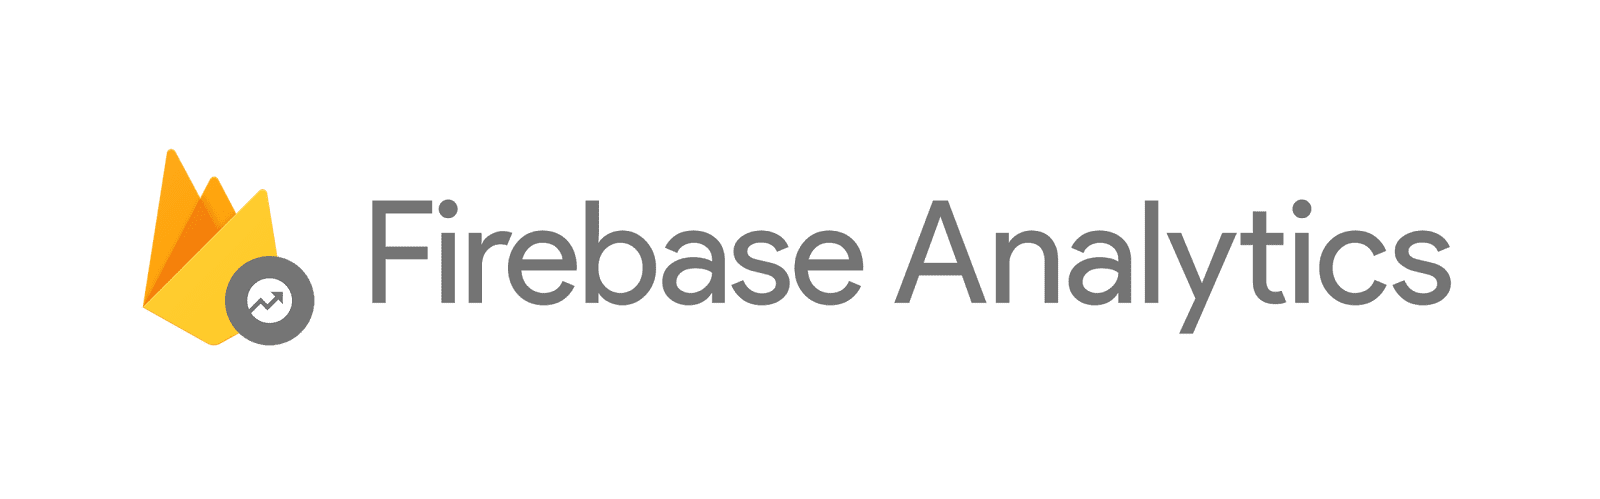 firebase analytics